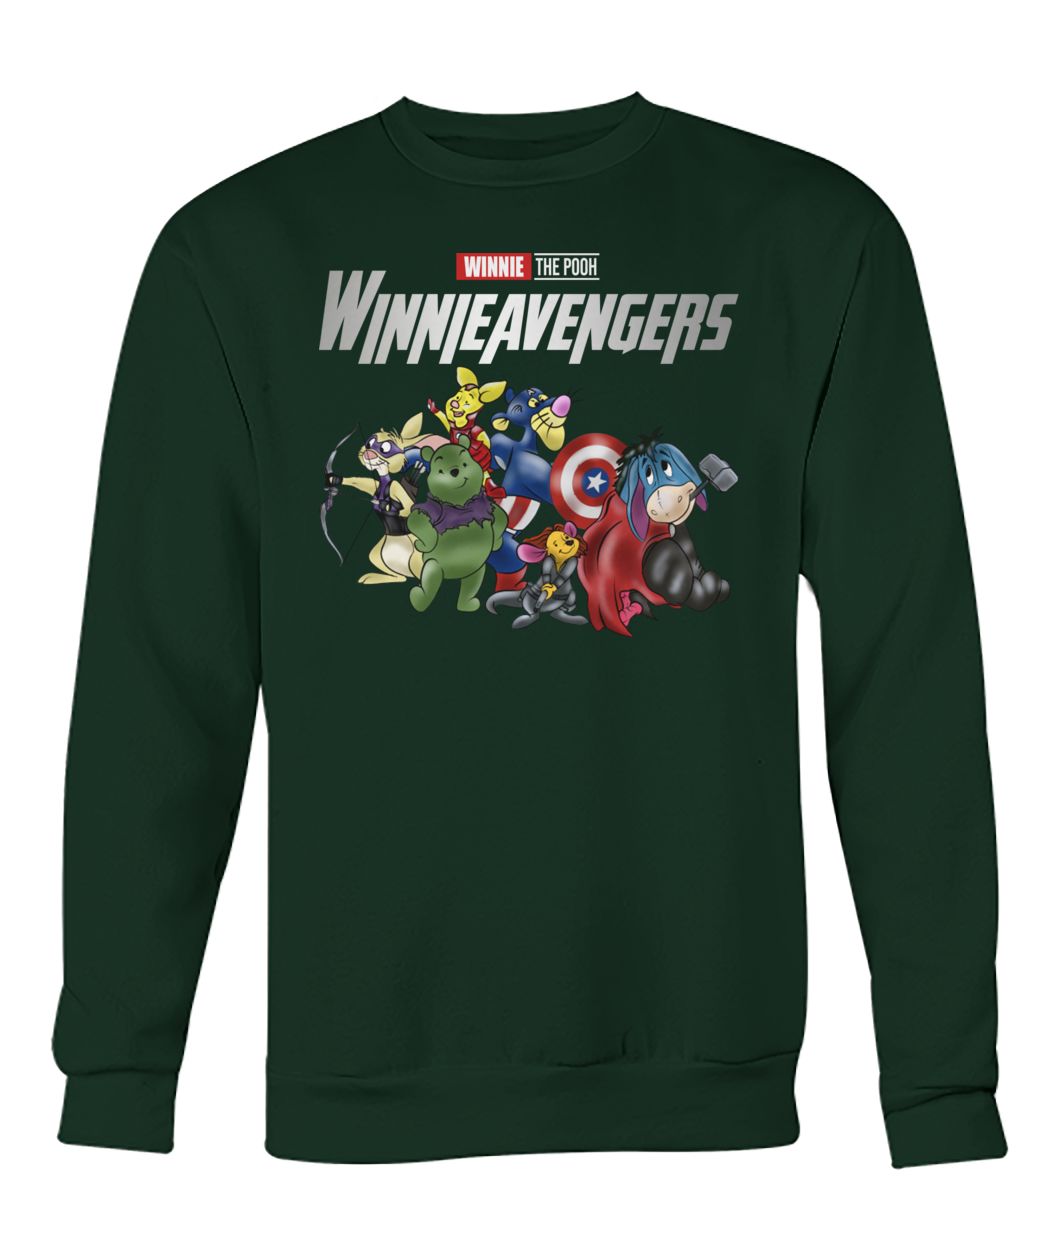 Marvel avengers endgame winnieavengers winnie the pooh crew neck sweatshirt